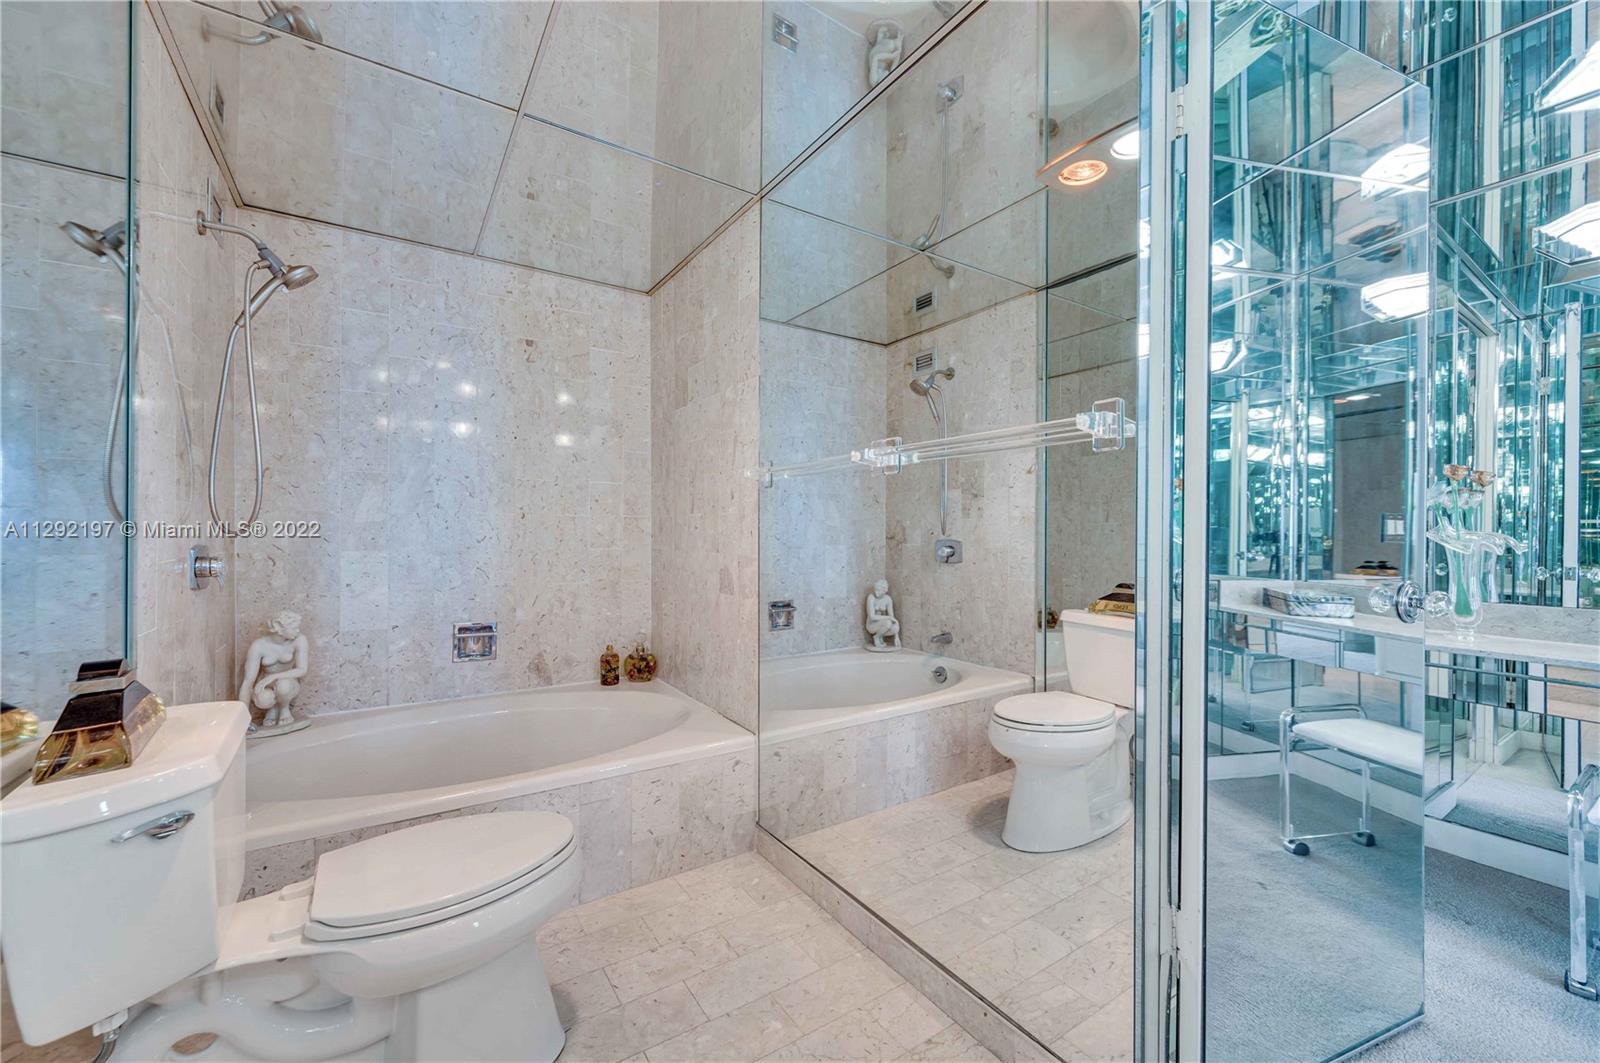 Main bathroom tub/shower